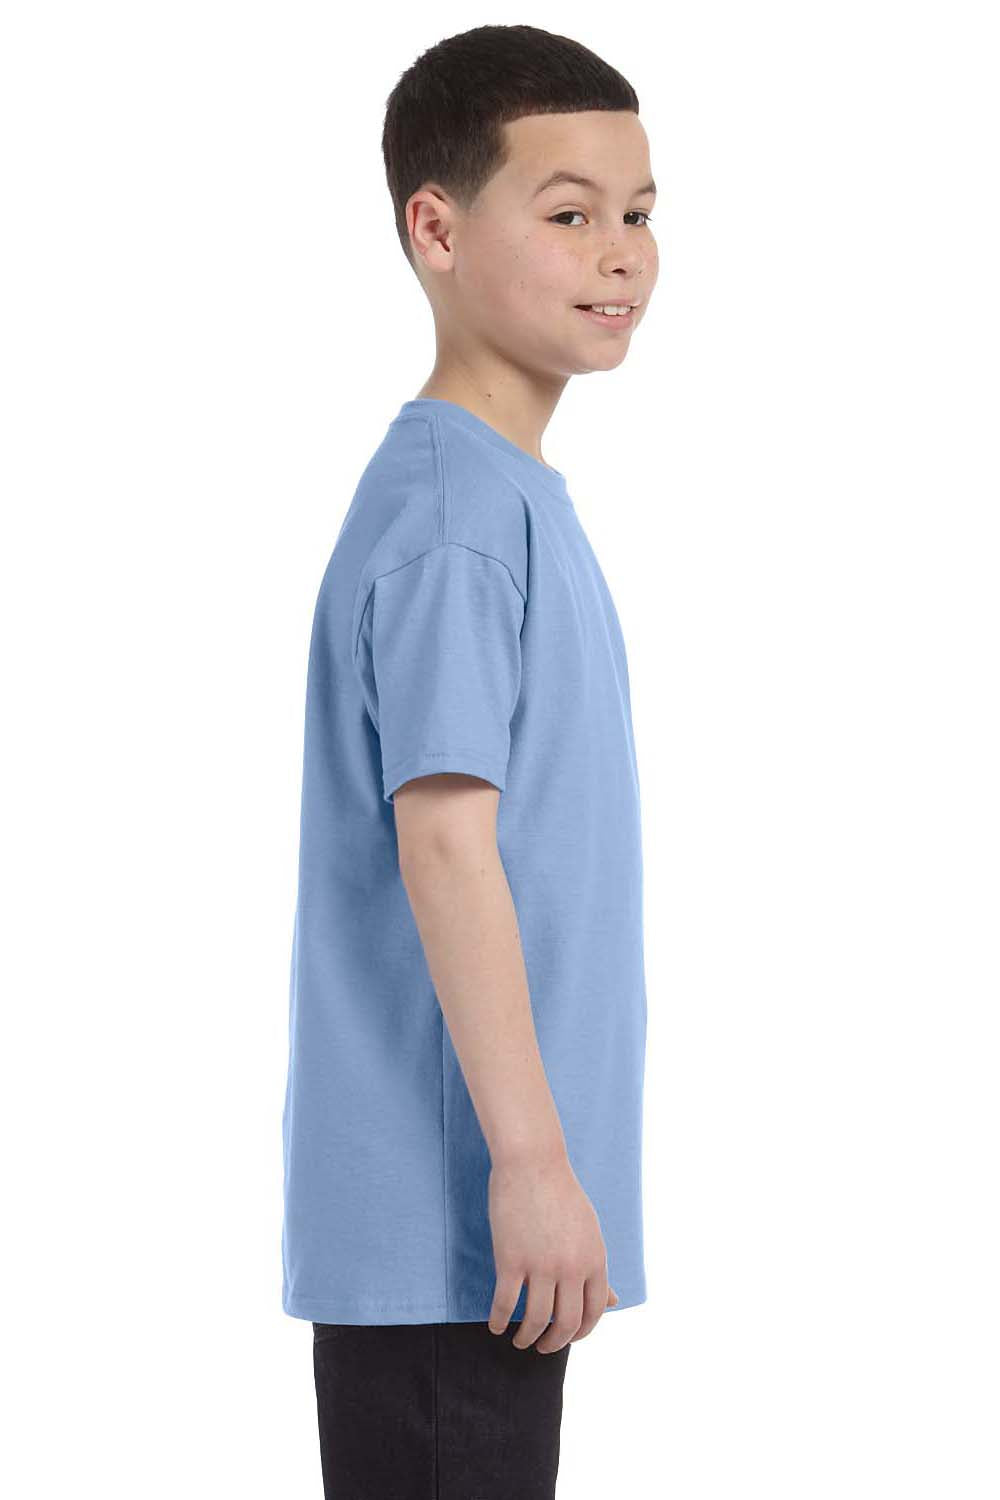 Hanes 54500 Youth ComfortSoft Short Sleeve Crewneck T-Shirt Light Blue Side